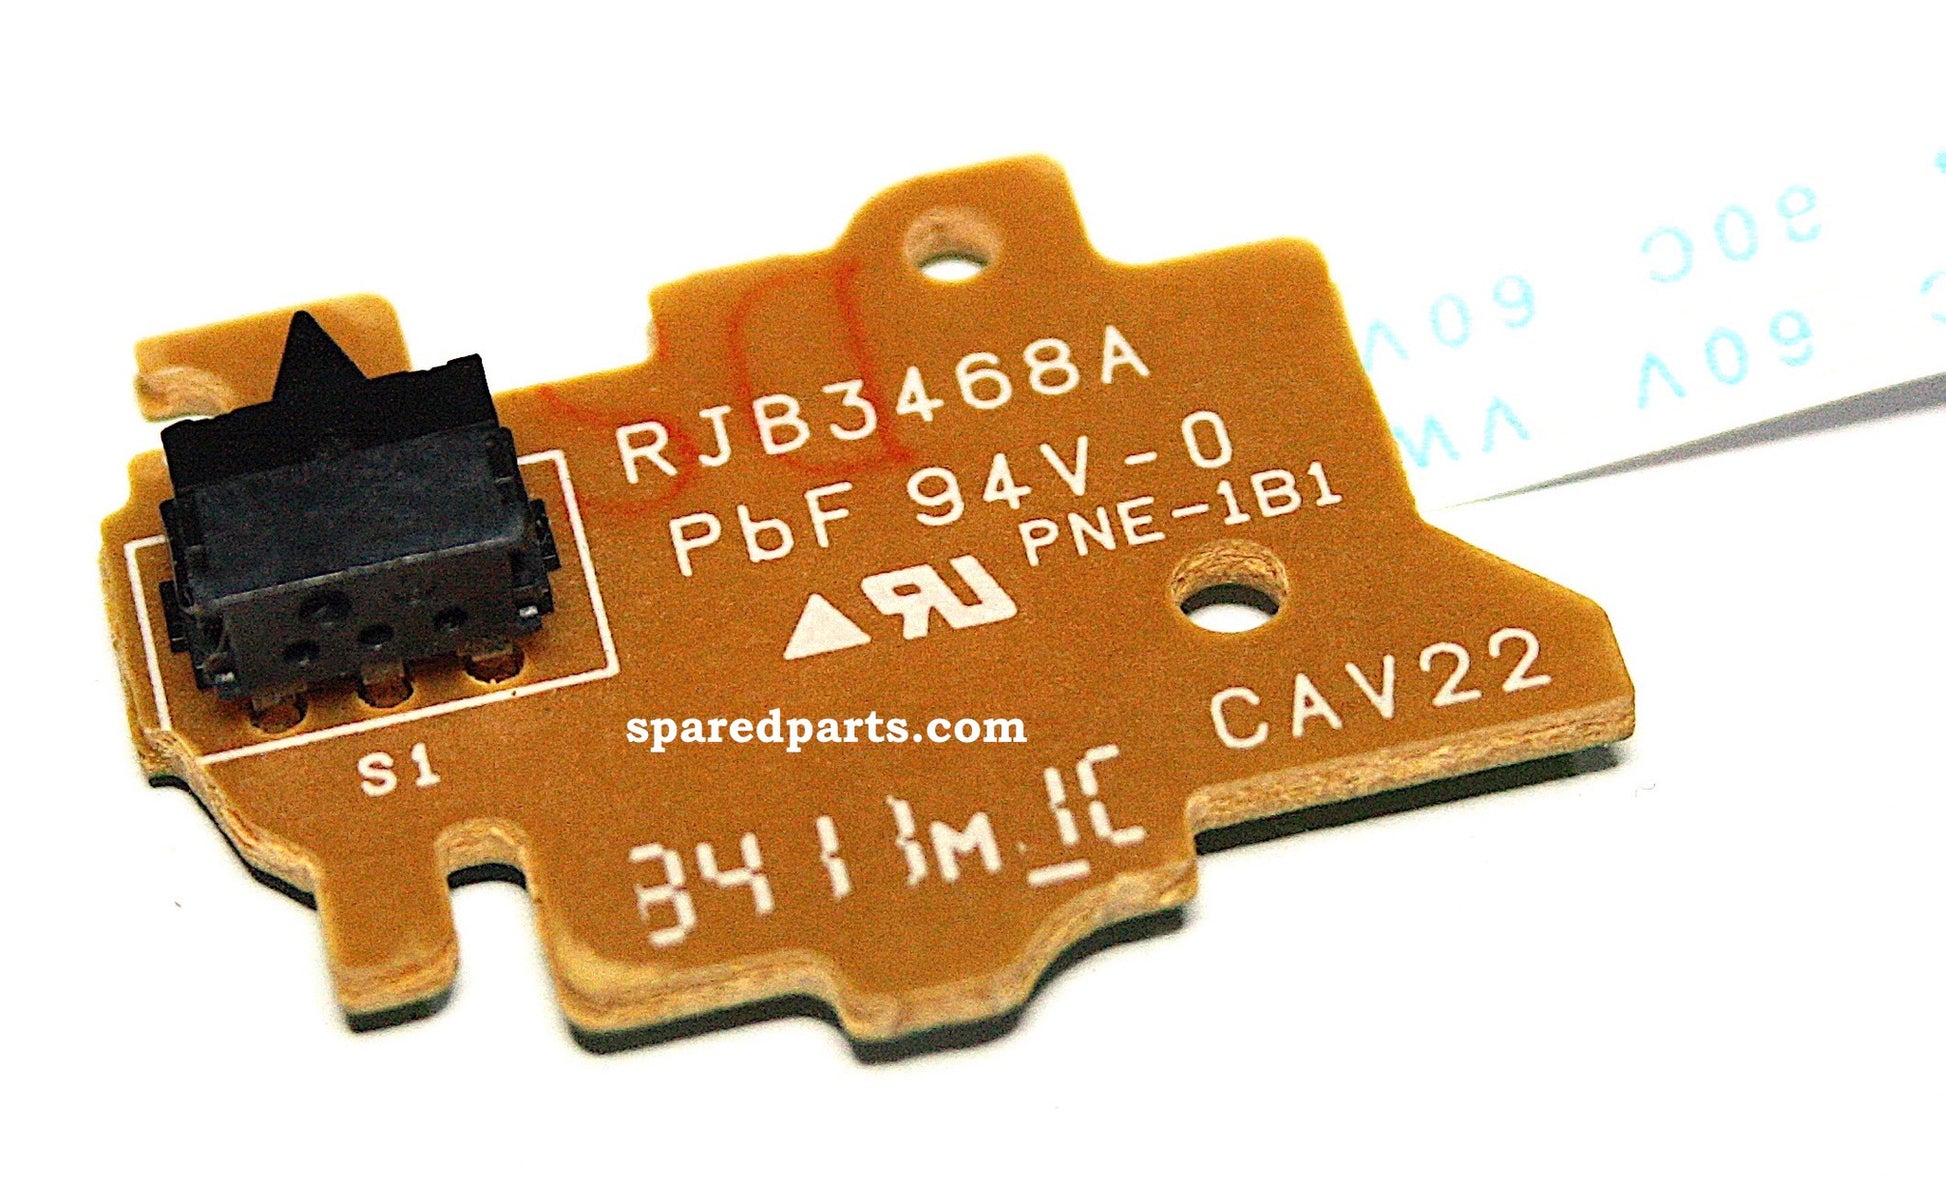 Panasonic RJB3468A Switch Loading PCB